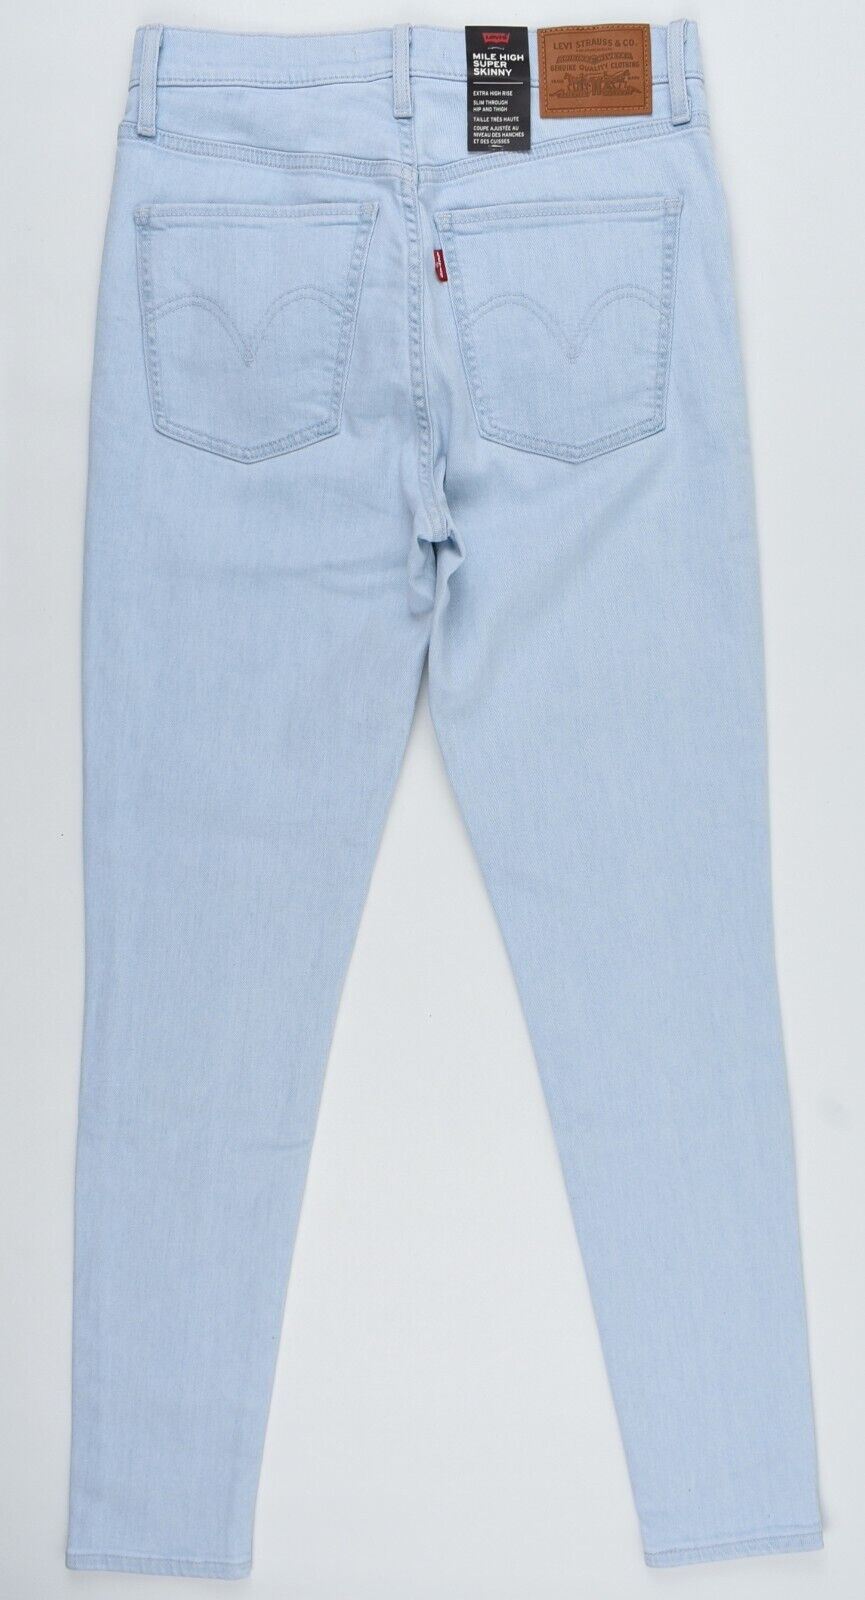 LEVI'S Women's Mile High Super Skinny Stretch Denim Jeans, Blue, size W28 L28